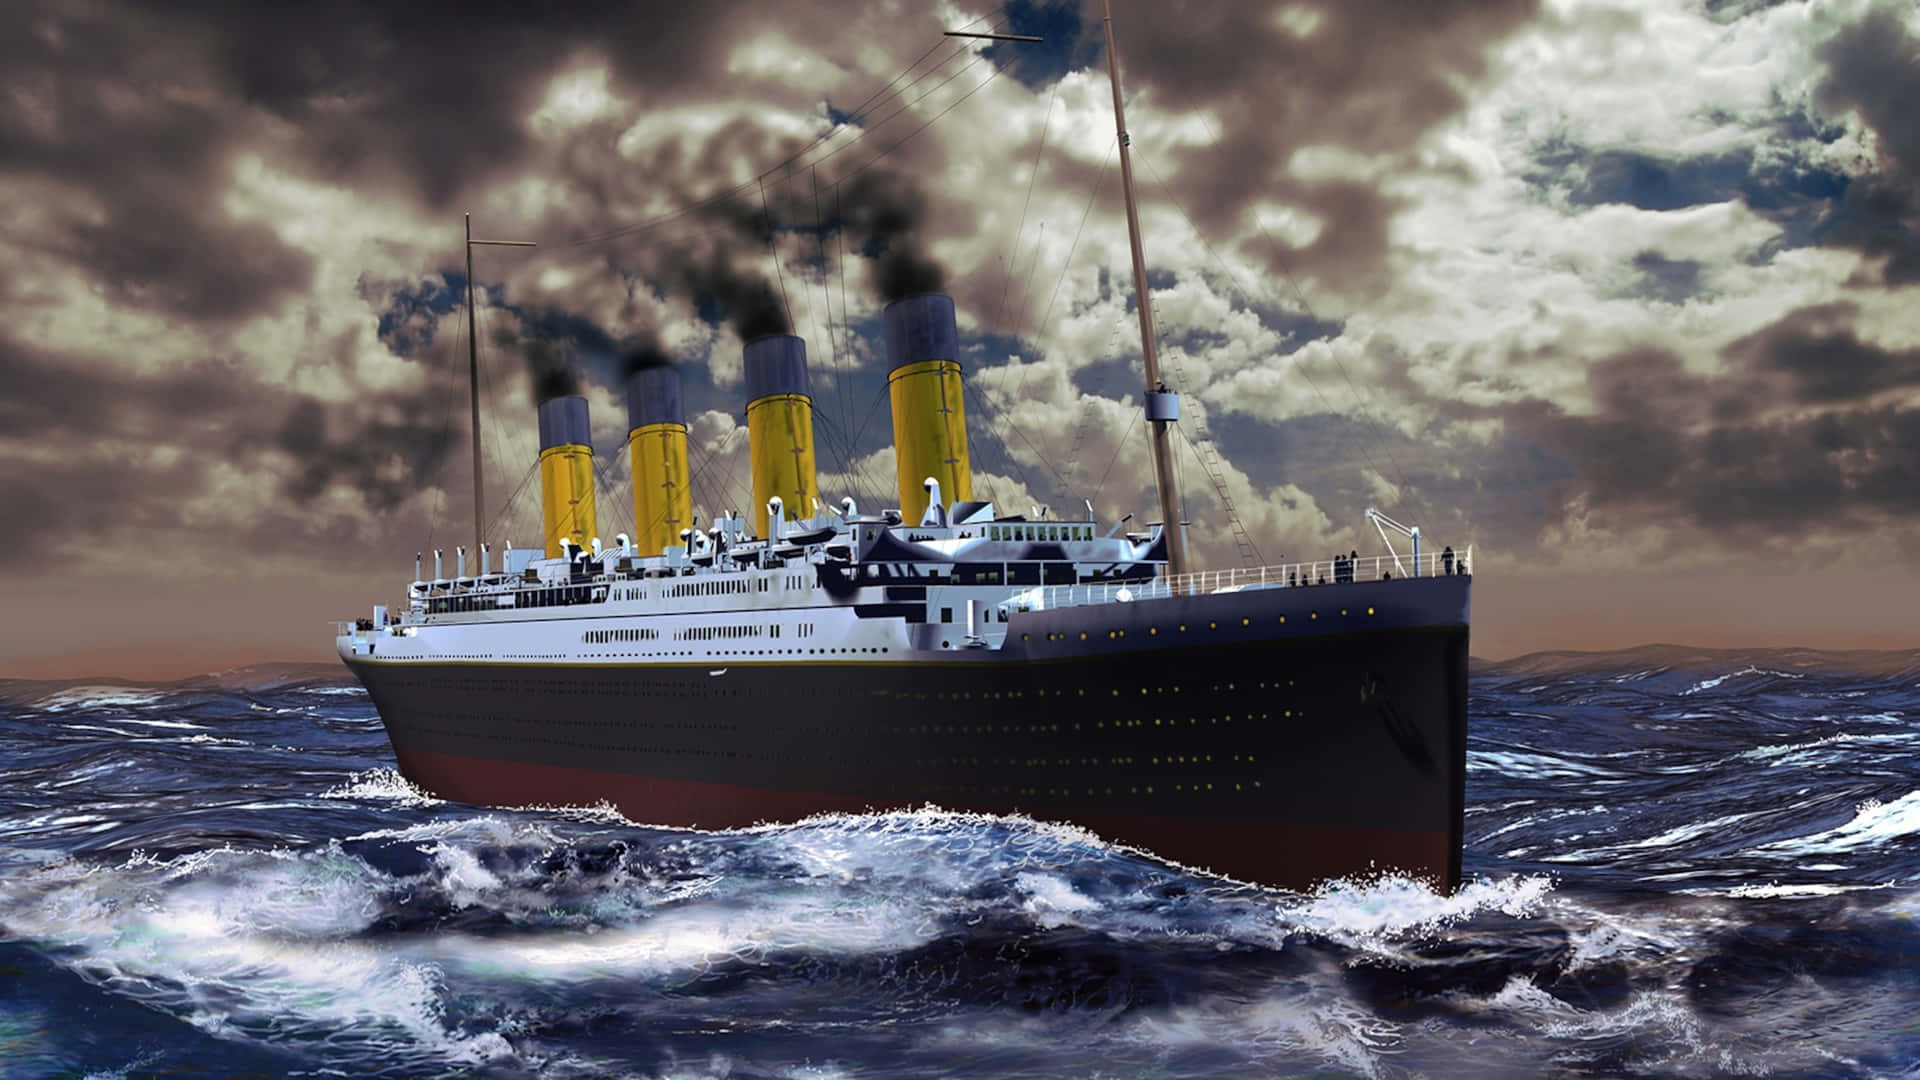 Titanic,et Smukt Men Dømt Skib.